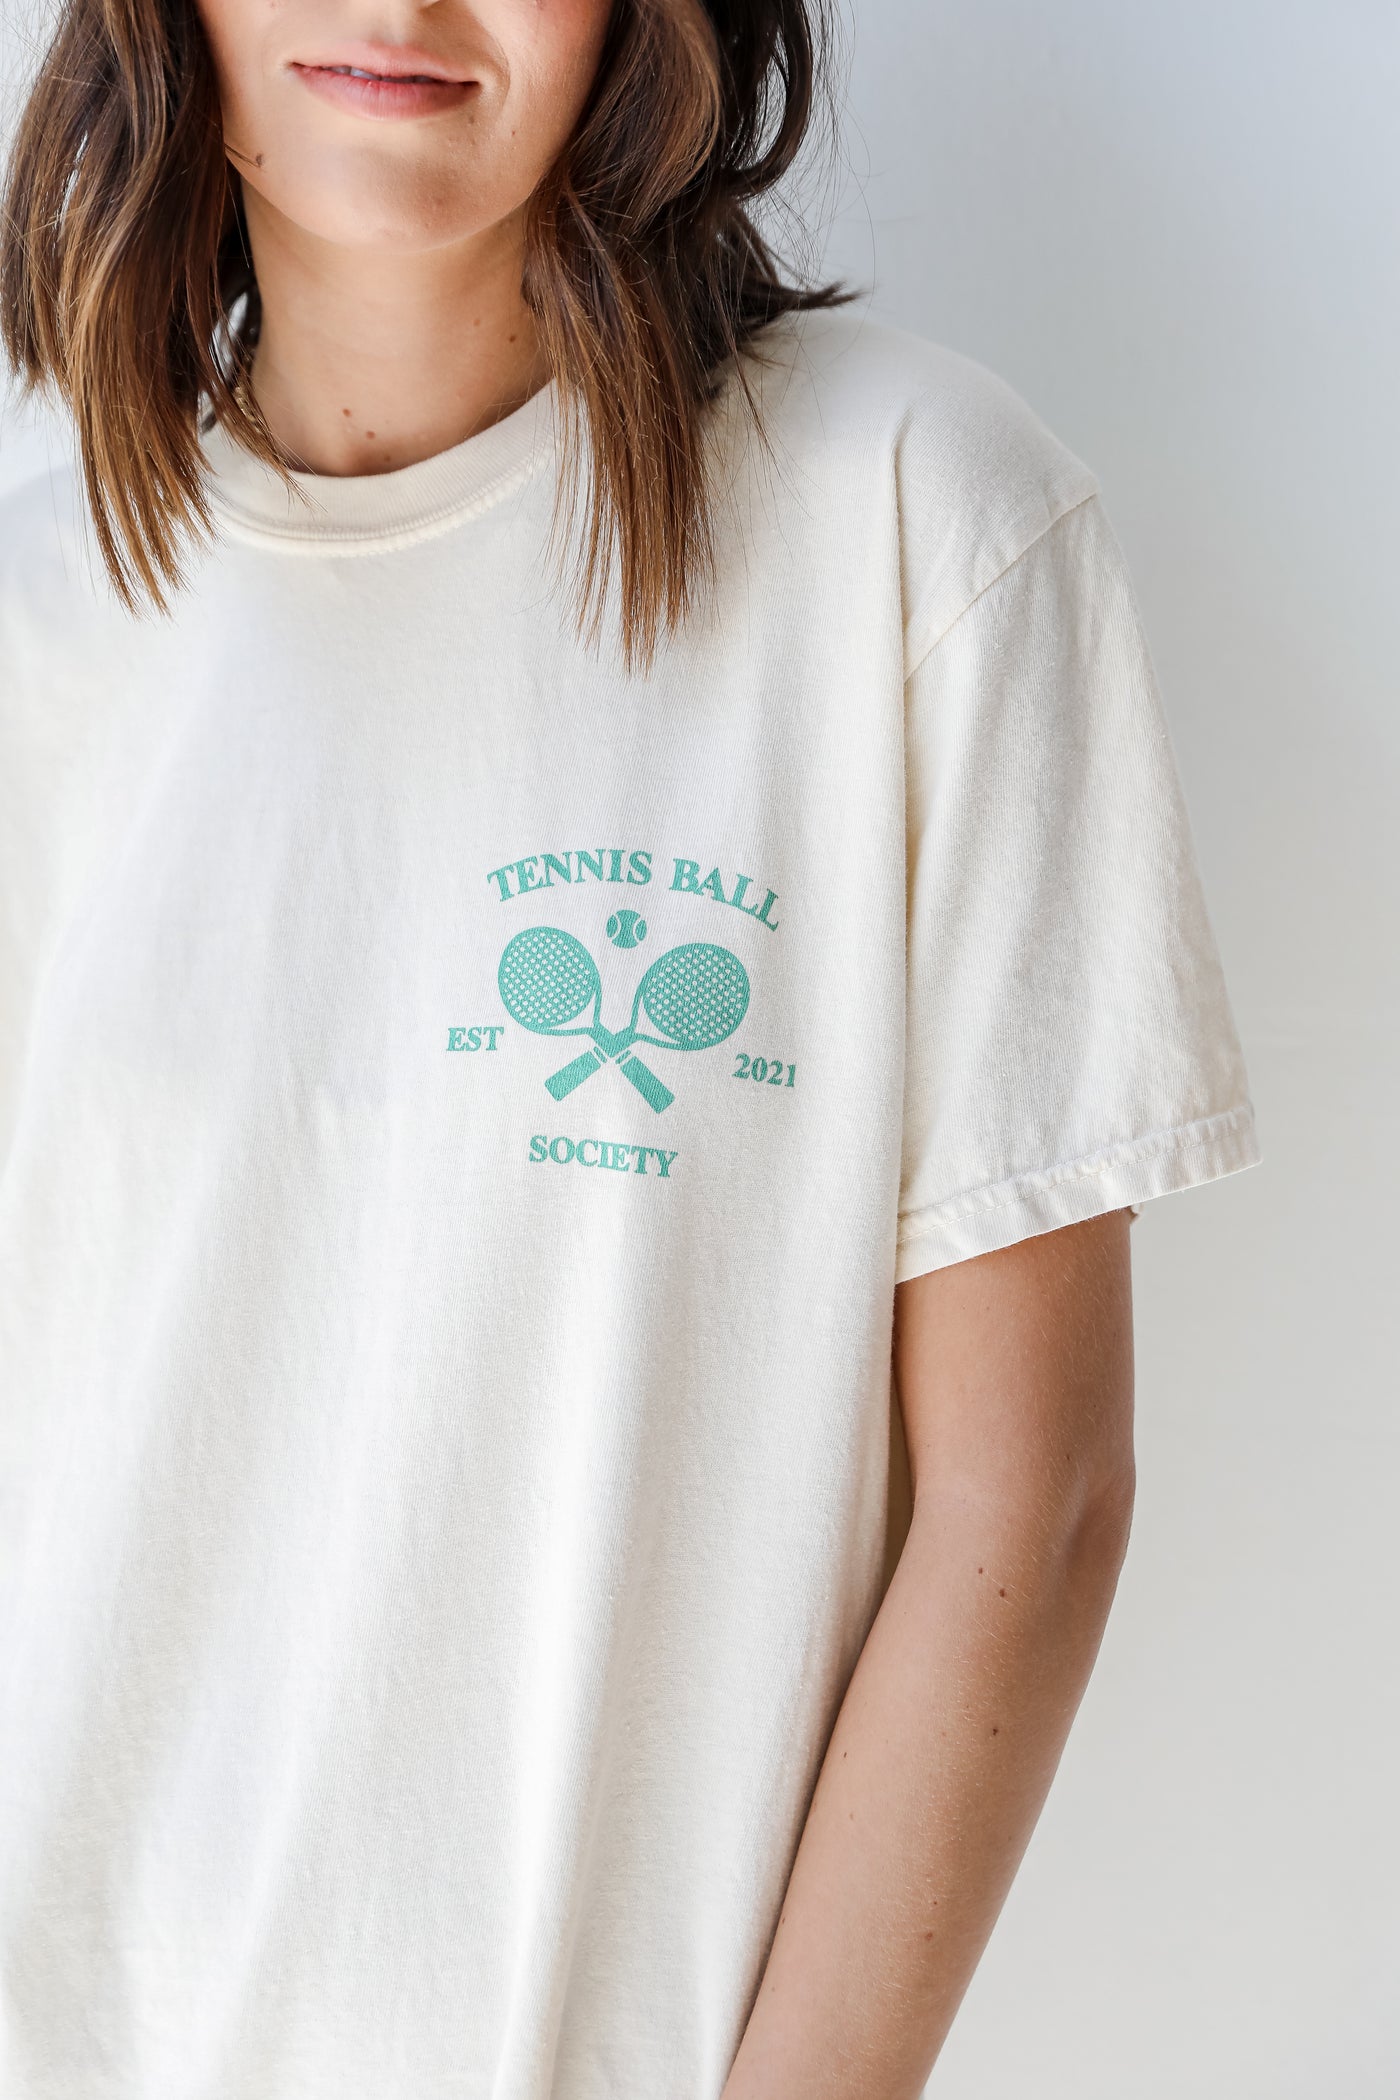 Tennis Ball Society Graphic Tee close up